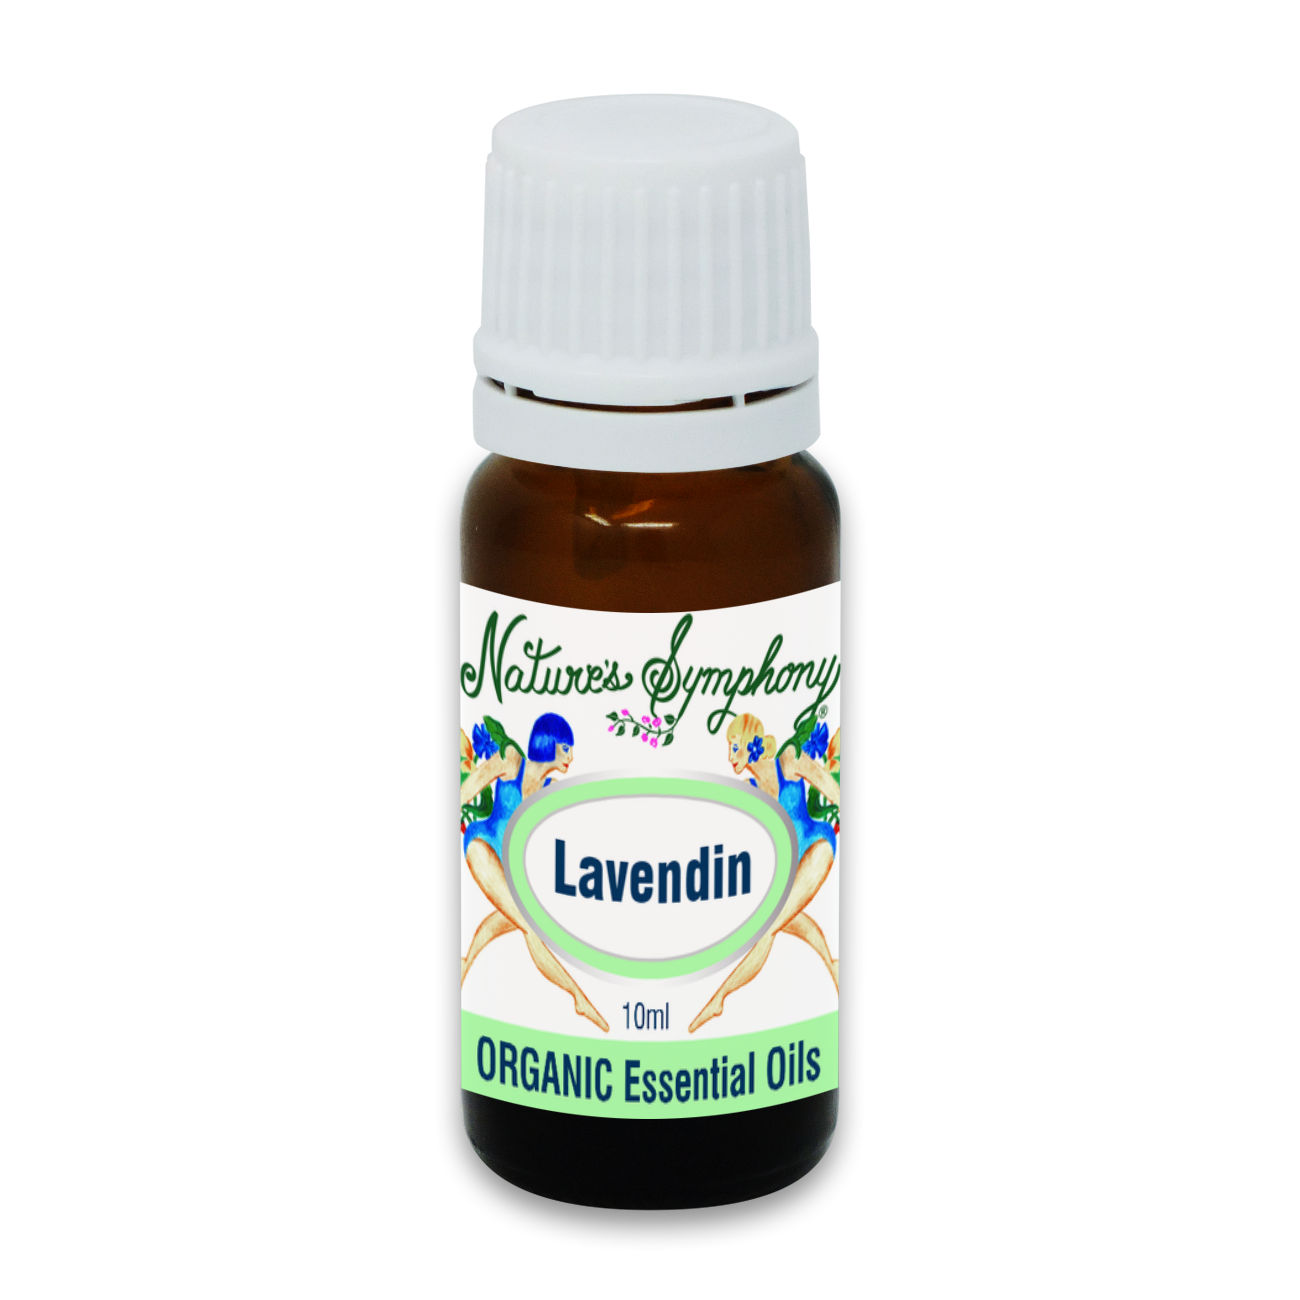 Lavendin, Organic/Wildcrafted oil - 10ml